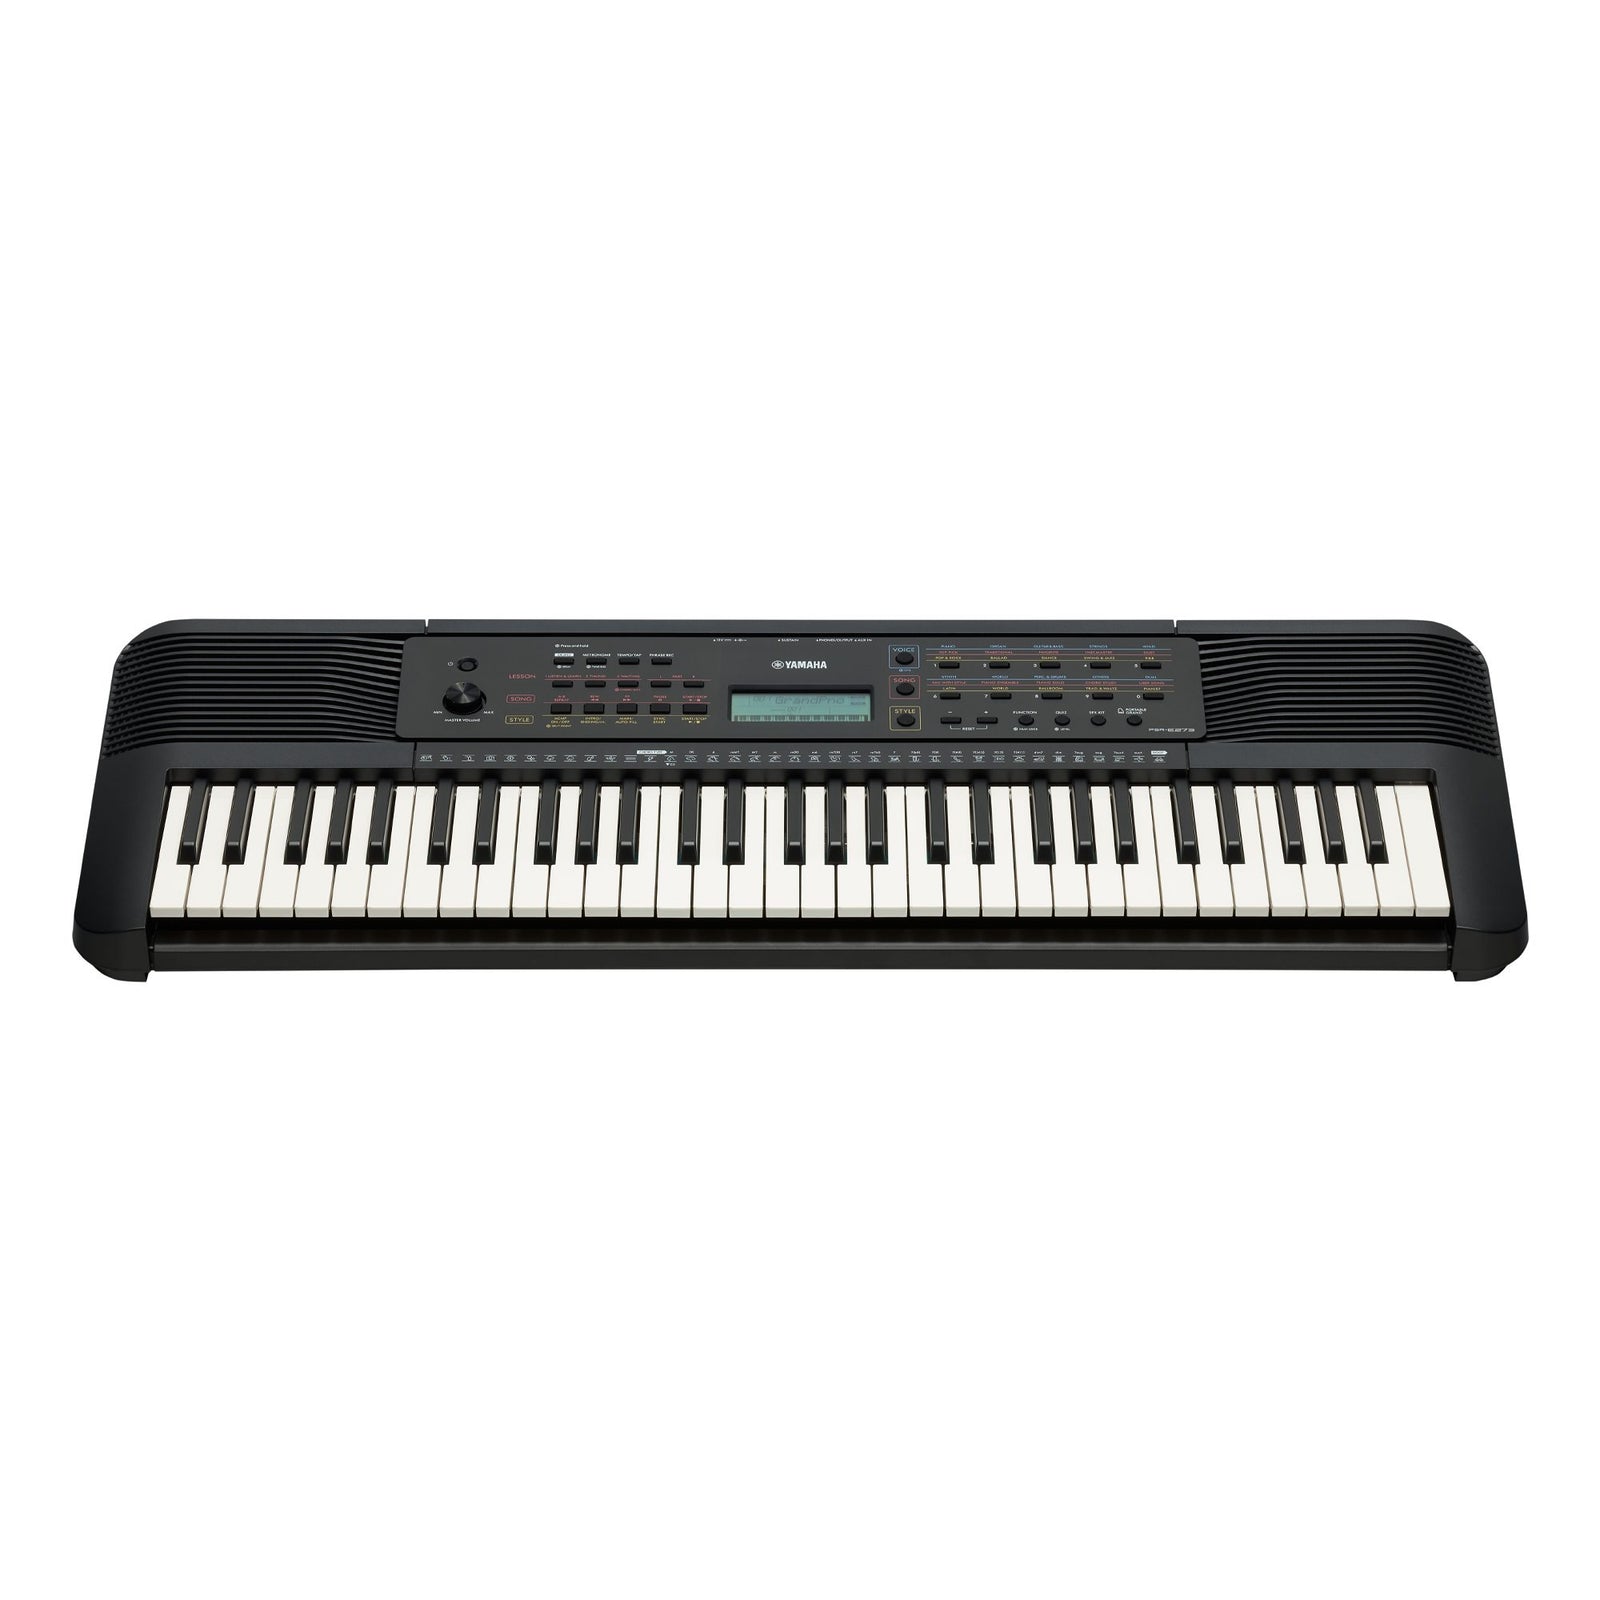 18876 Controller keyboard tray